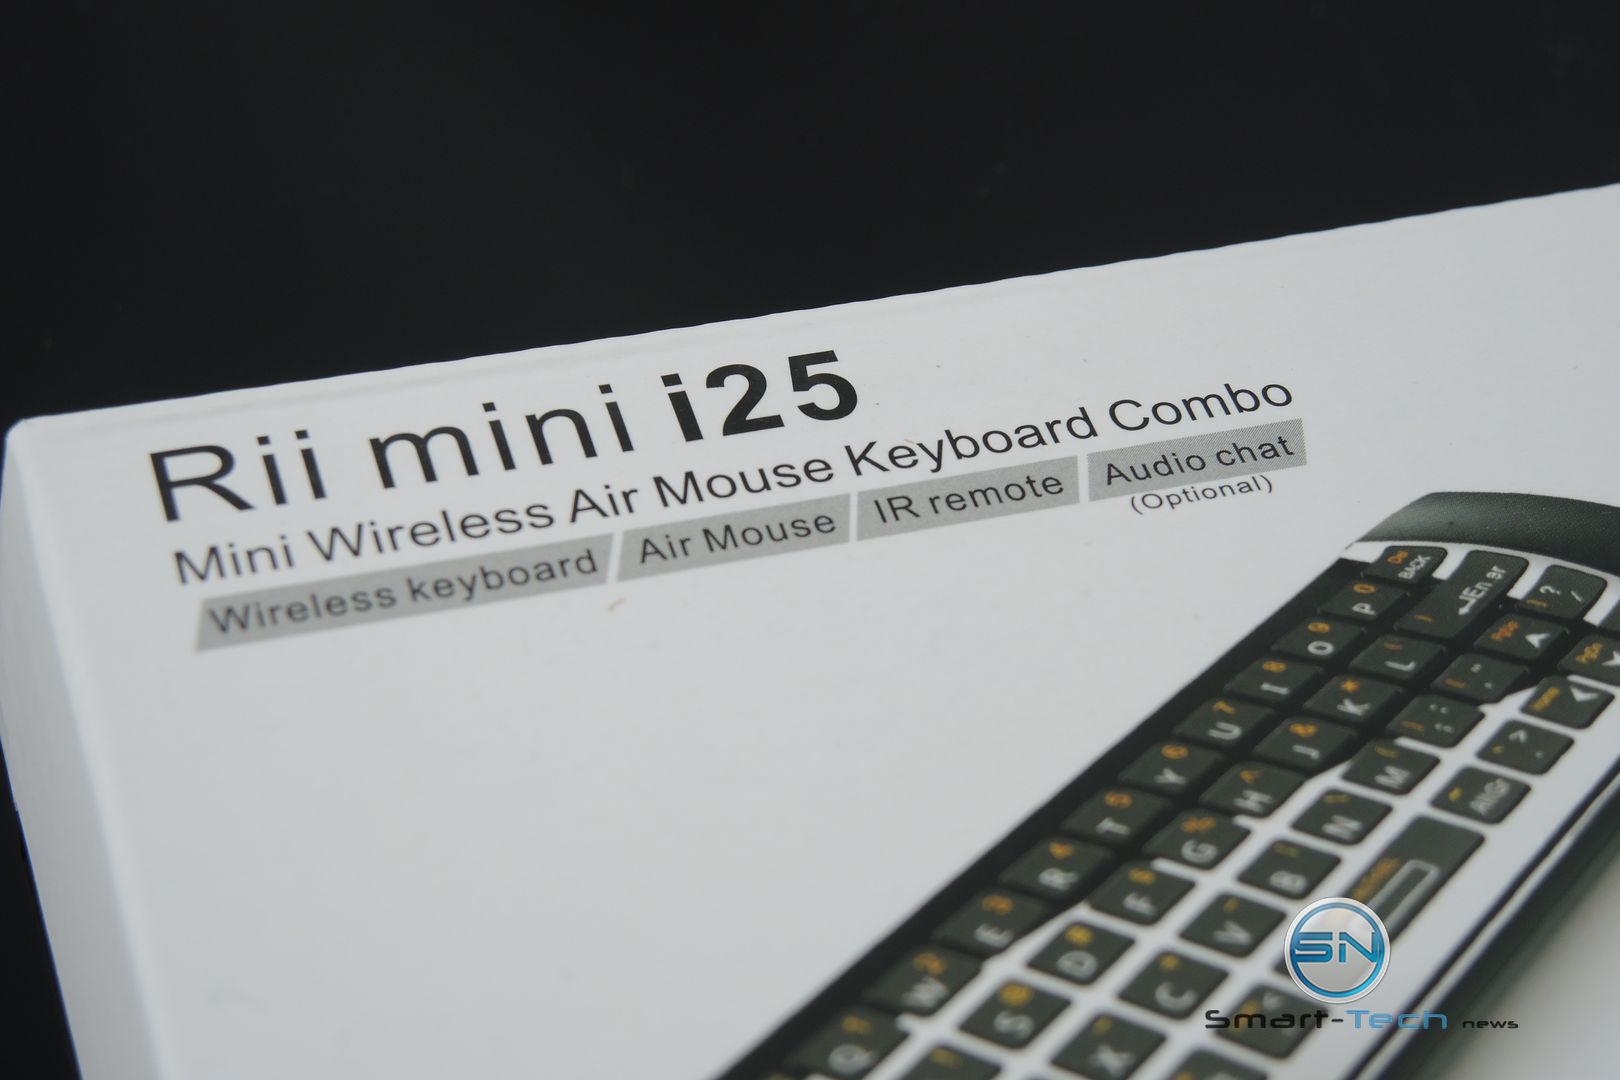 eine-fuer-alles-rii-mini-25-mini-wireless-air-mouse-keyboard-combo-smarttechnews